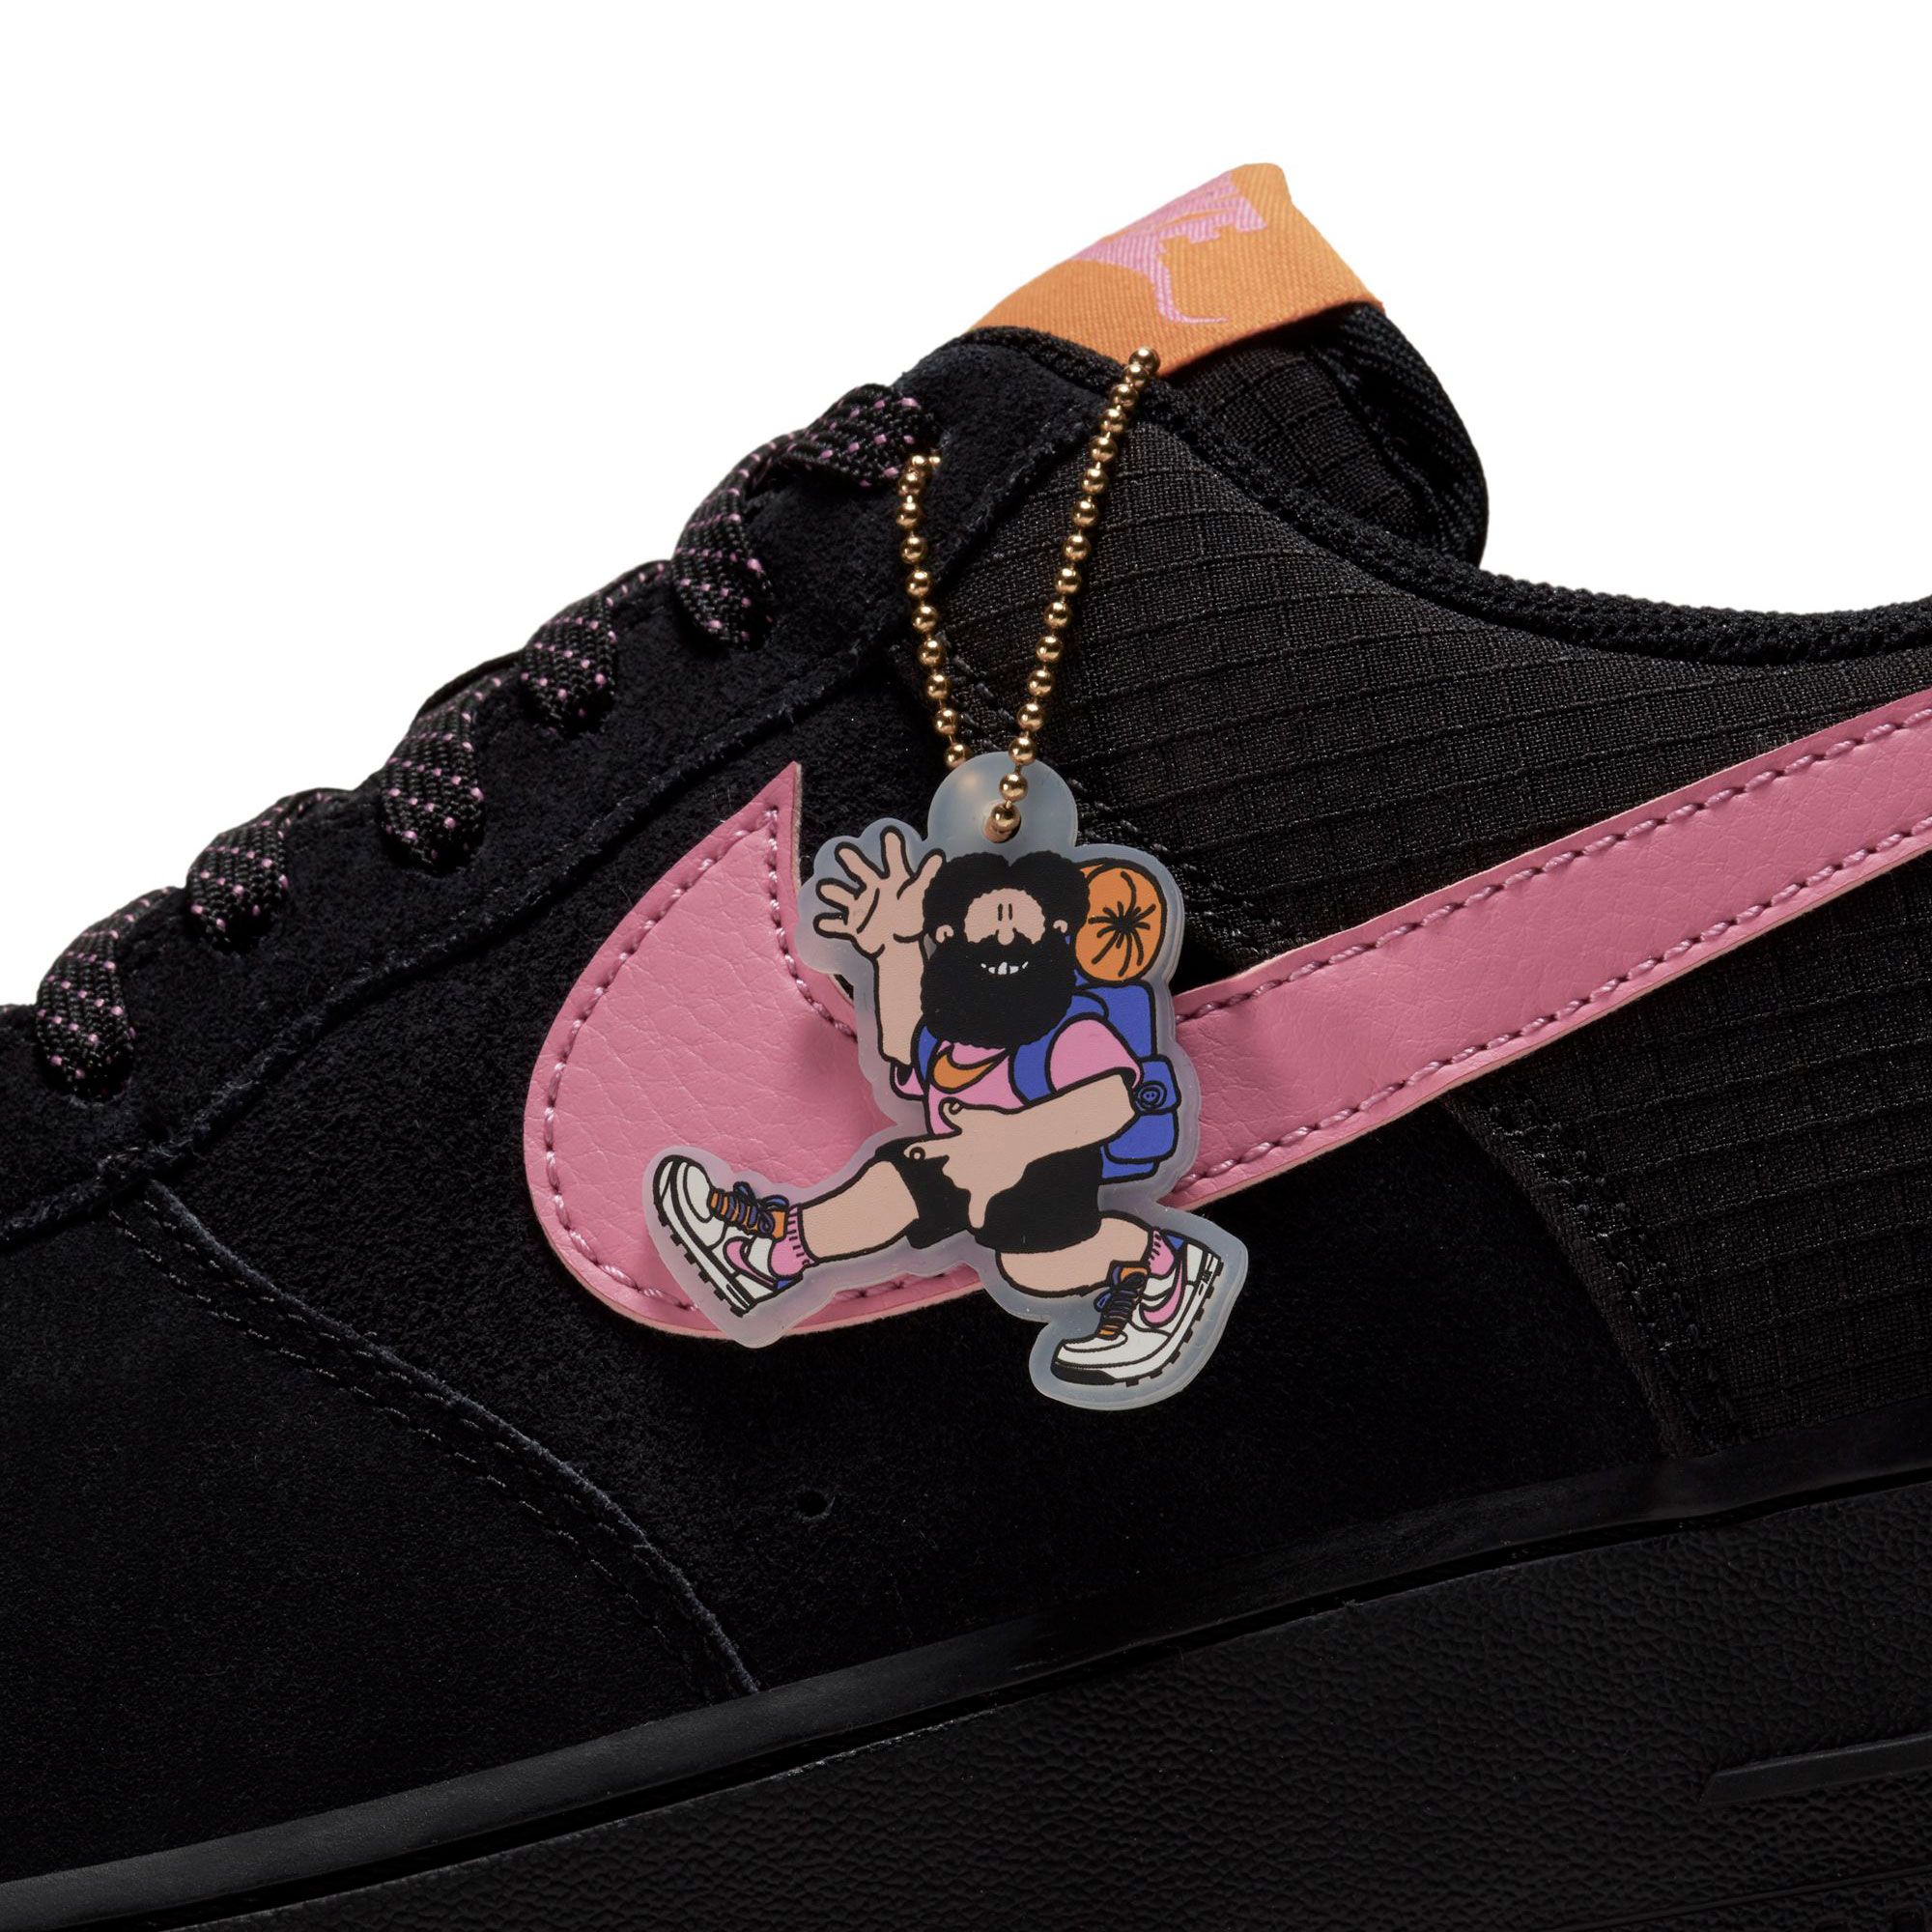 Nike Air Force 1 LV8 2 Big Kids' Shoes Black-Persian Violet-Pollen Rise  cn5710-001